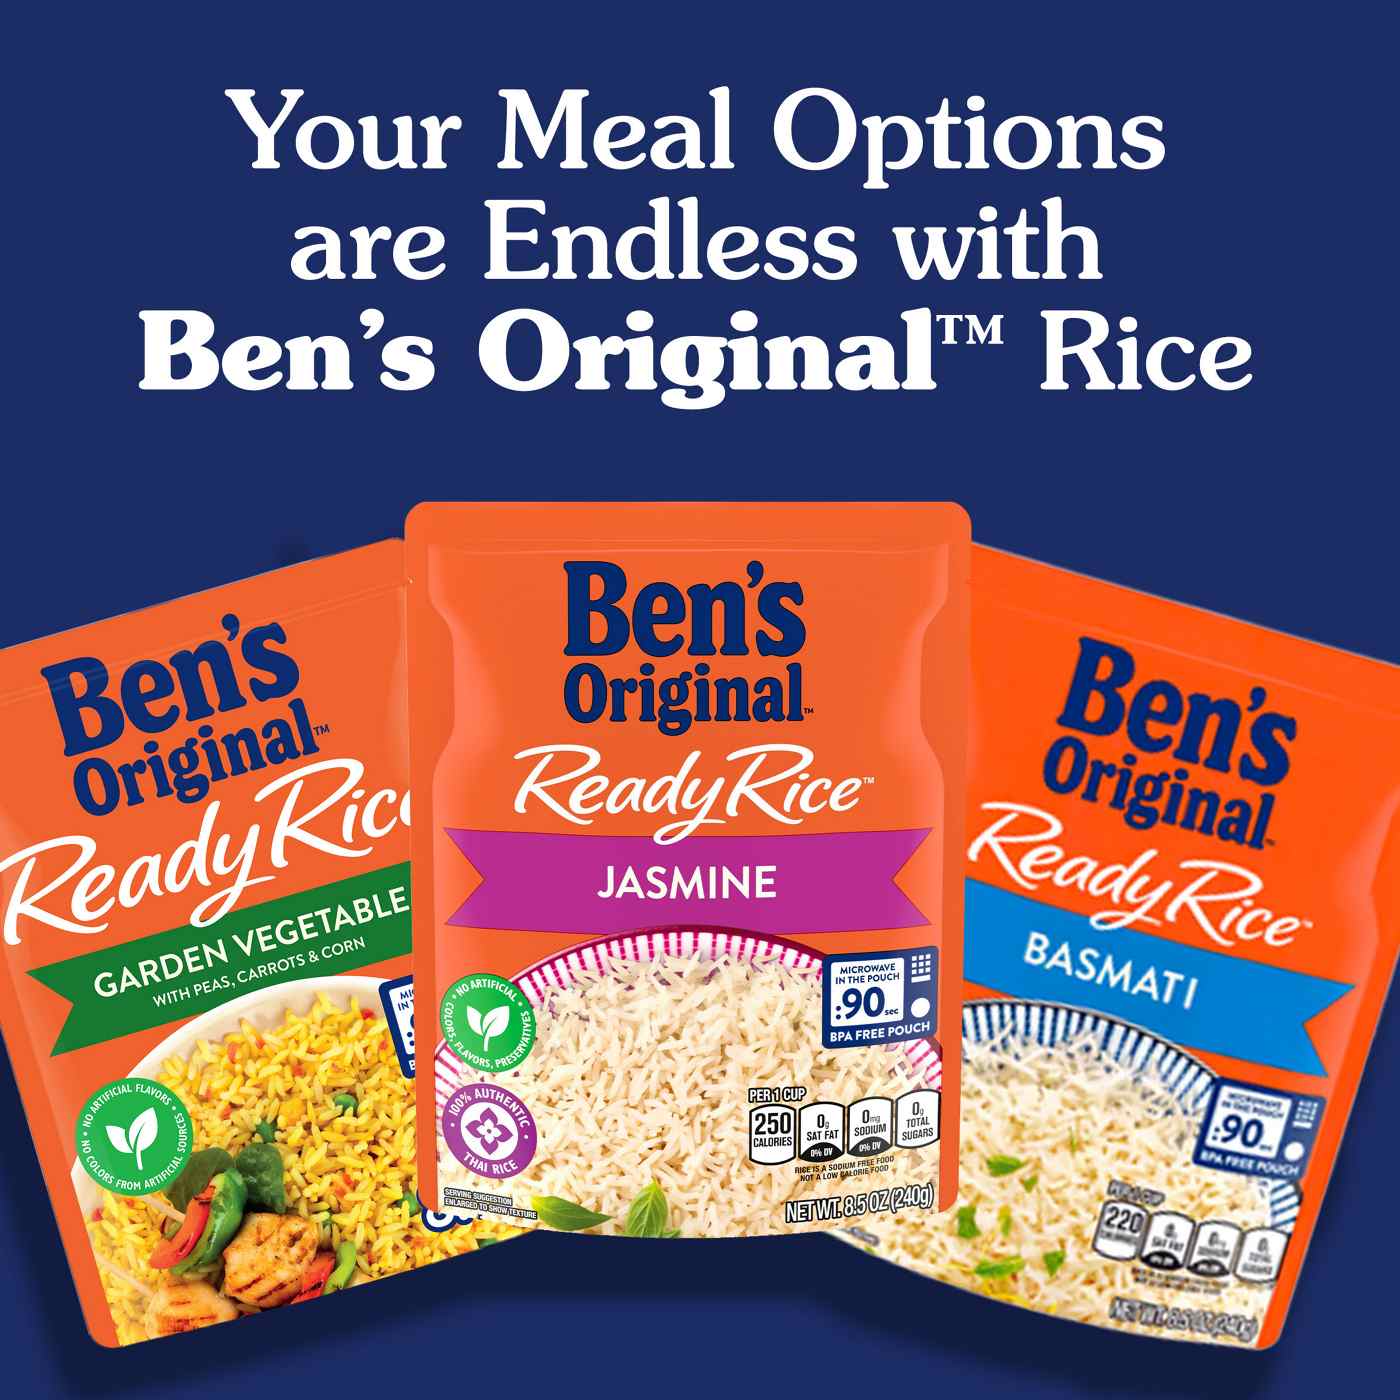 Ben's Original Ready Rice Jasmine Family Size Rice; image 5 of 7